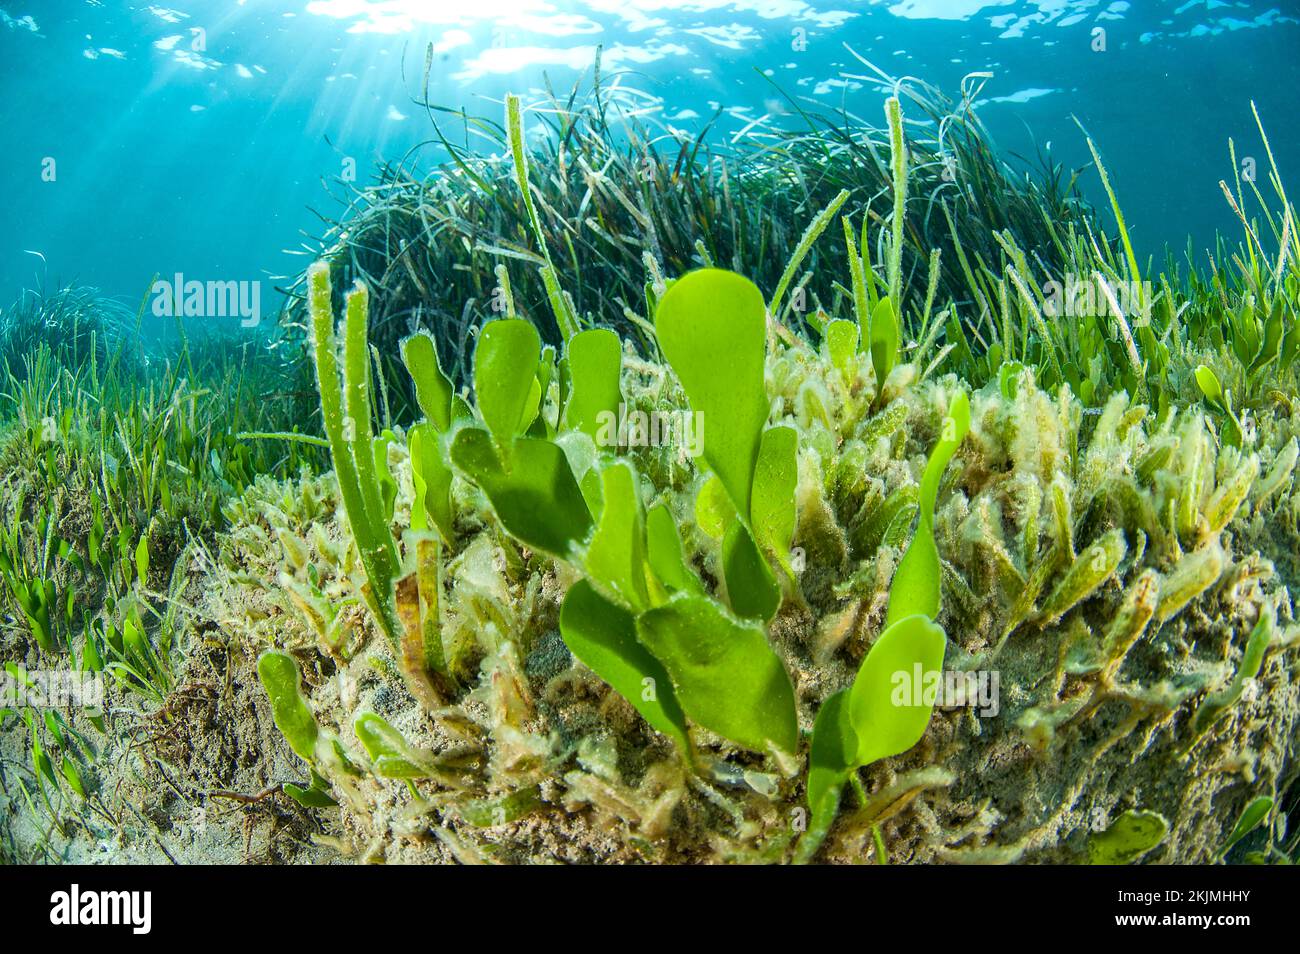 Green alga Caulerpa prolifera and Halophila stipulacea seagrass, Kokkini Hani, Crete Stock Photo